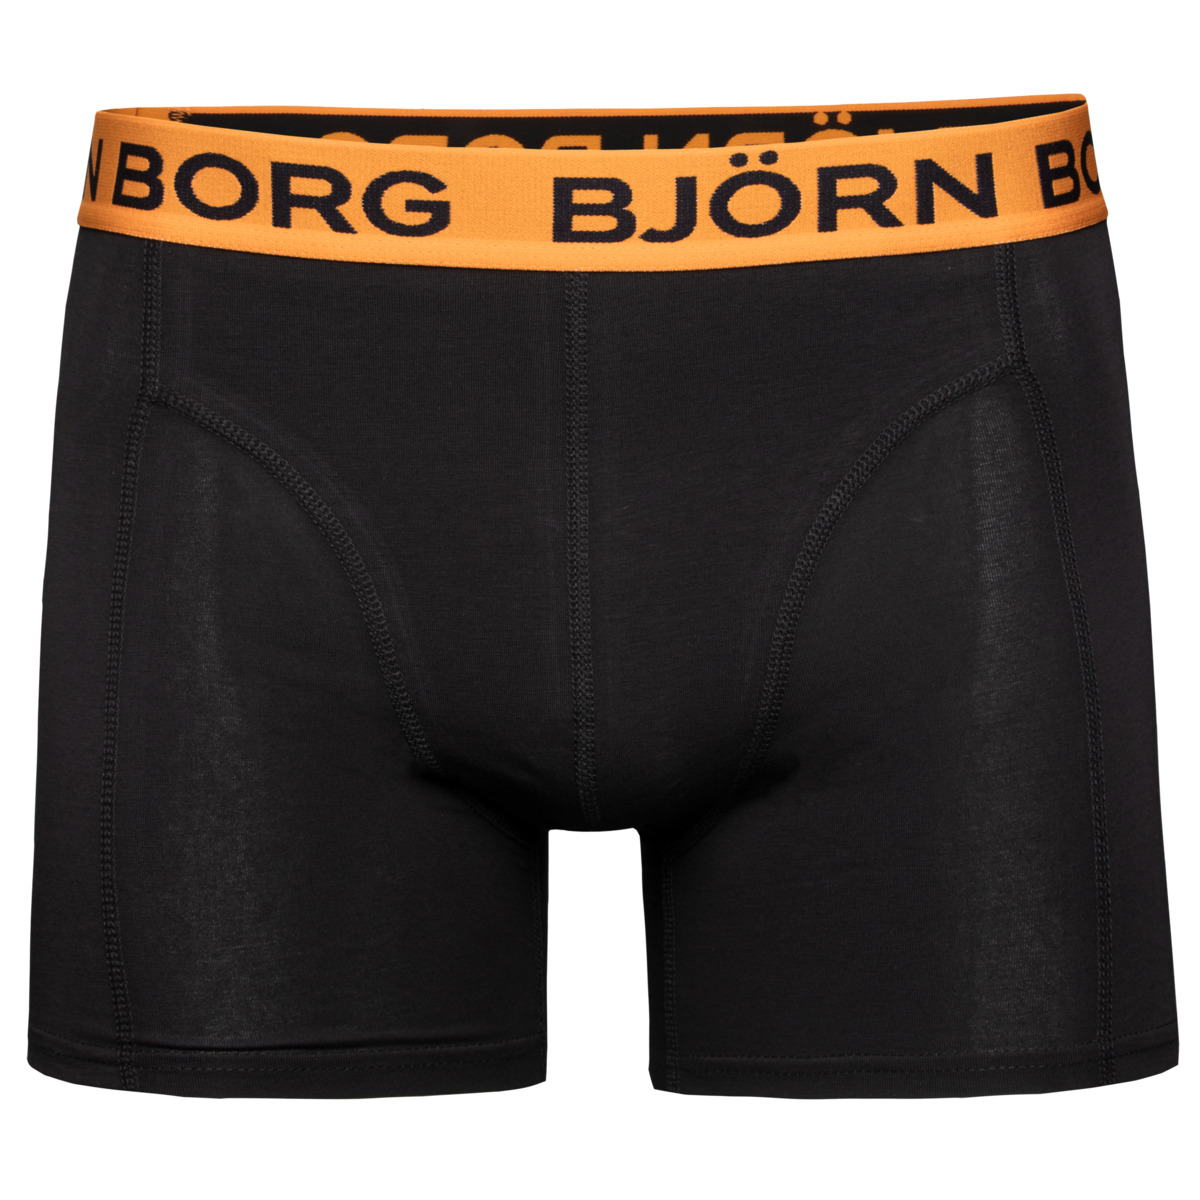 Björn Borg Cotton Stretch Boxer 7er Pack Boxershorts schwarz